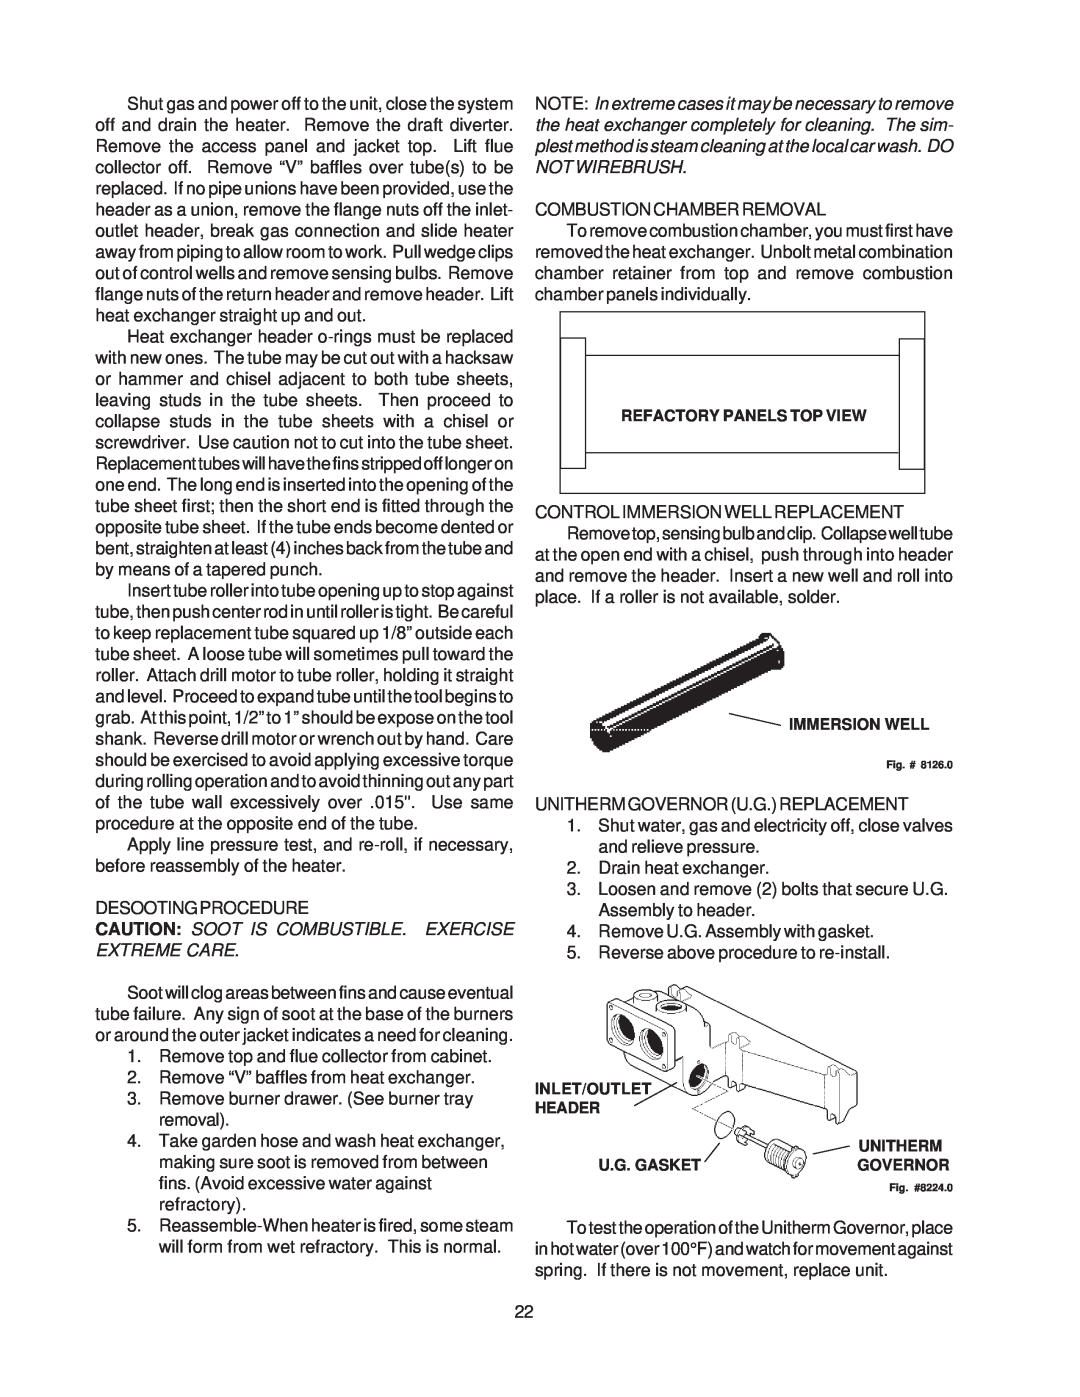 Raypak 514-824 manual Desootingprocedure 